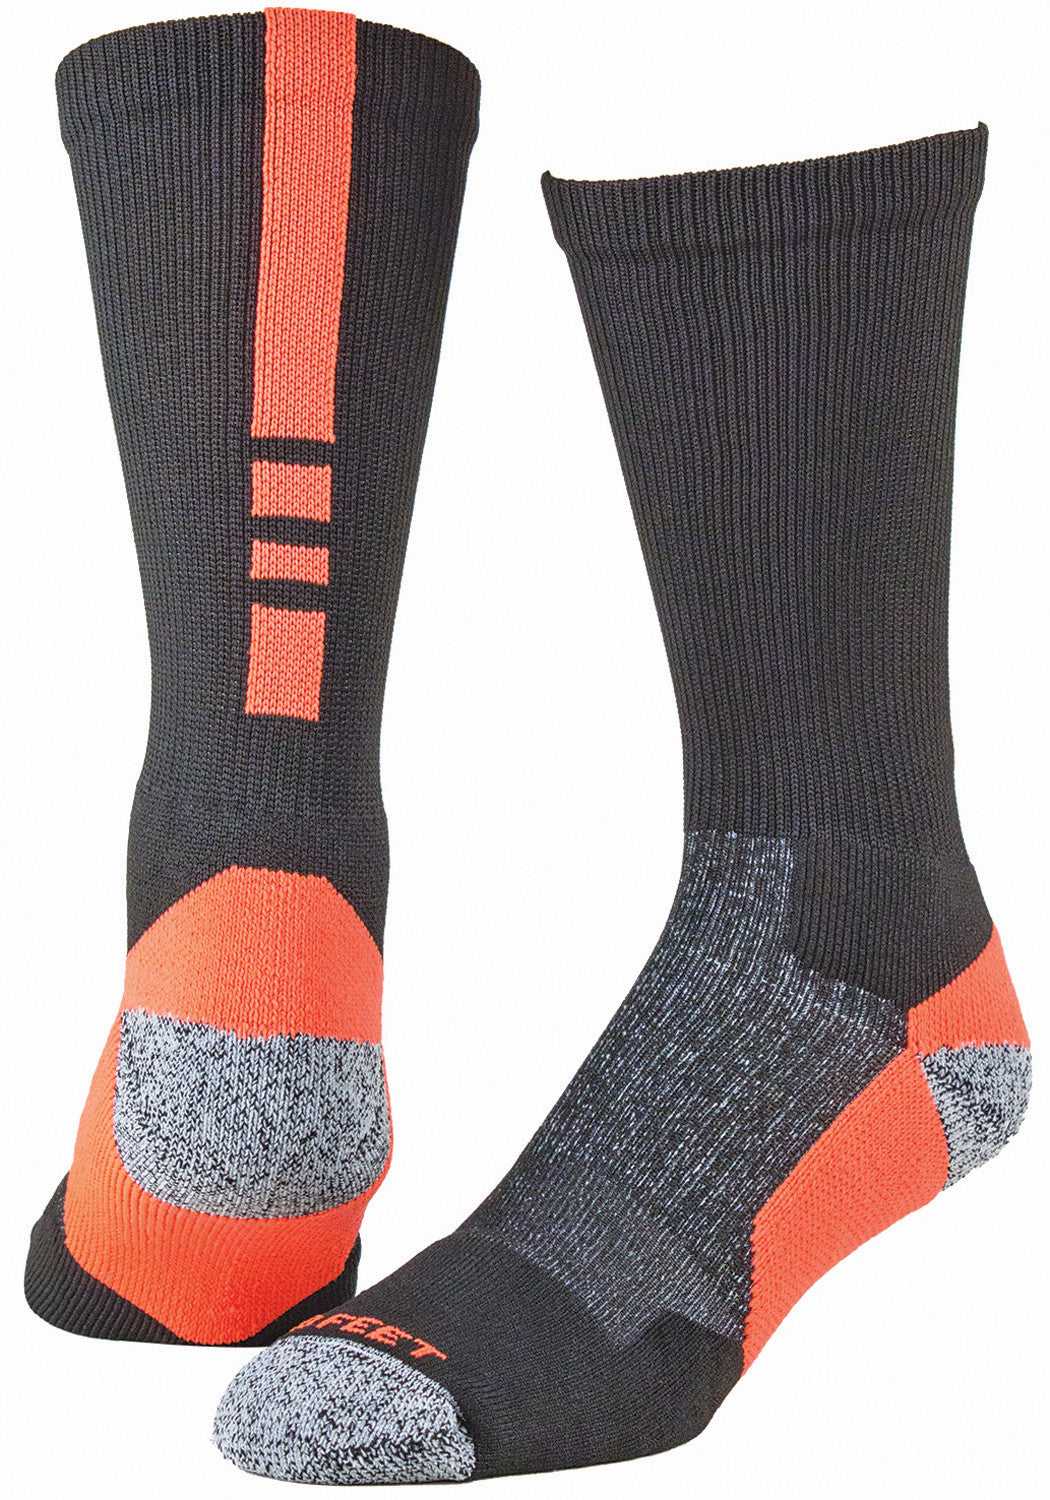 Pro Feet 238 Pro Feet Performance Shooter 2.0 Crew Socks - Black Neon Orange - HIT a Double